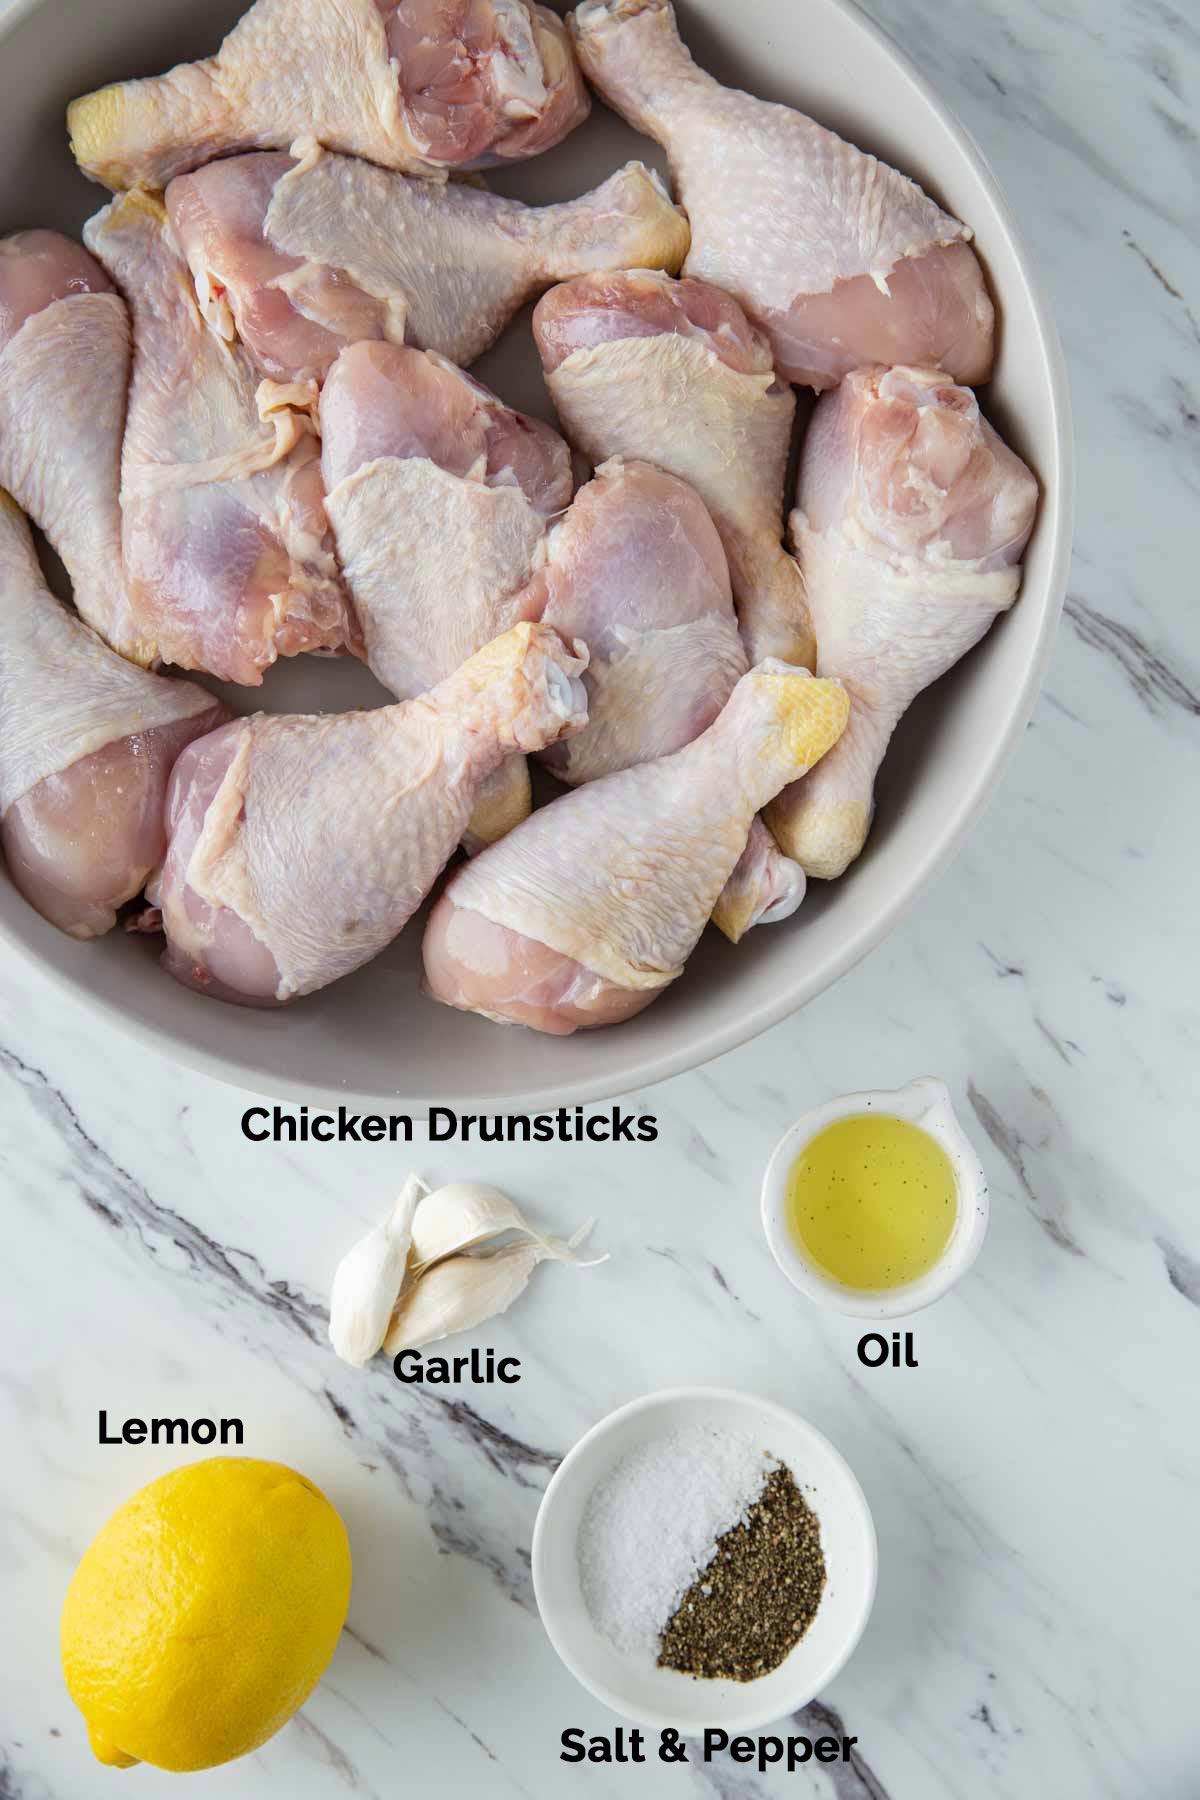 Raw chicken drumsticks, garlic, lemon, oil, salt pepper laid on a flat surface for making Instant Pot chicken drumsticks.